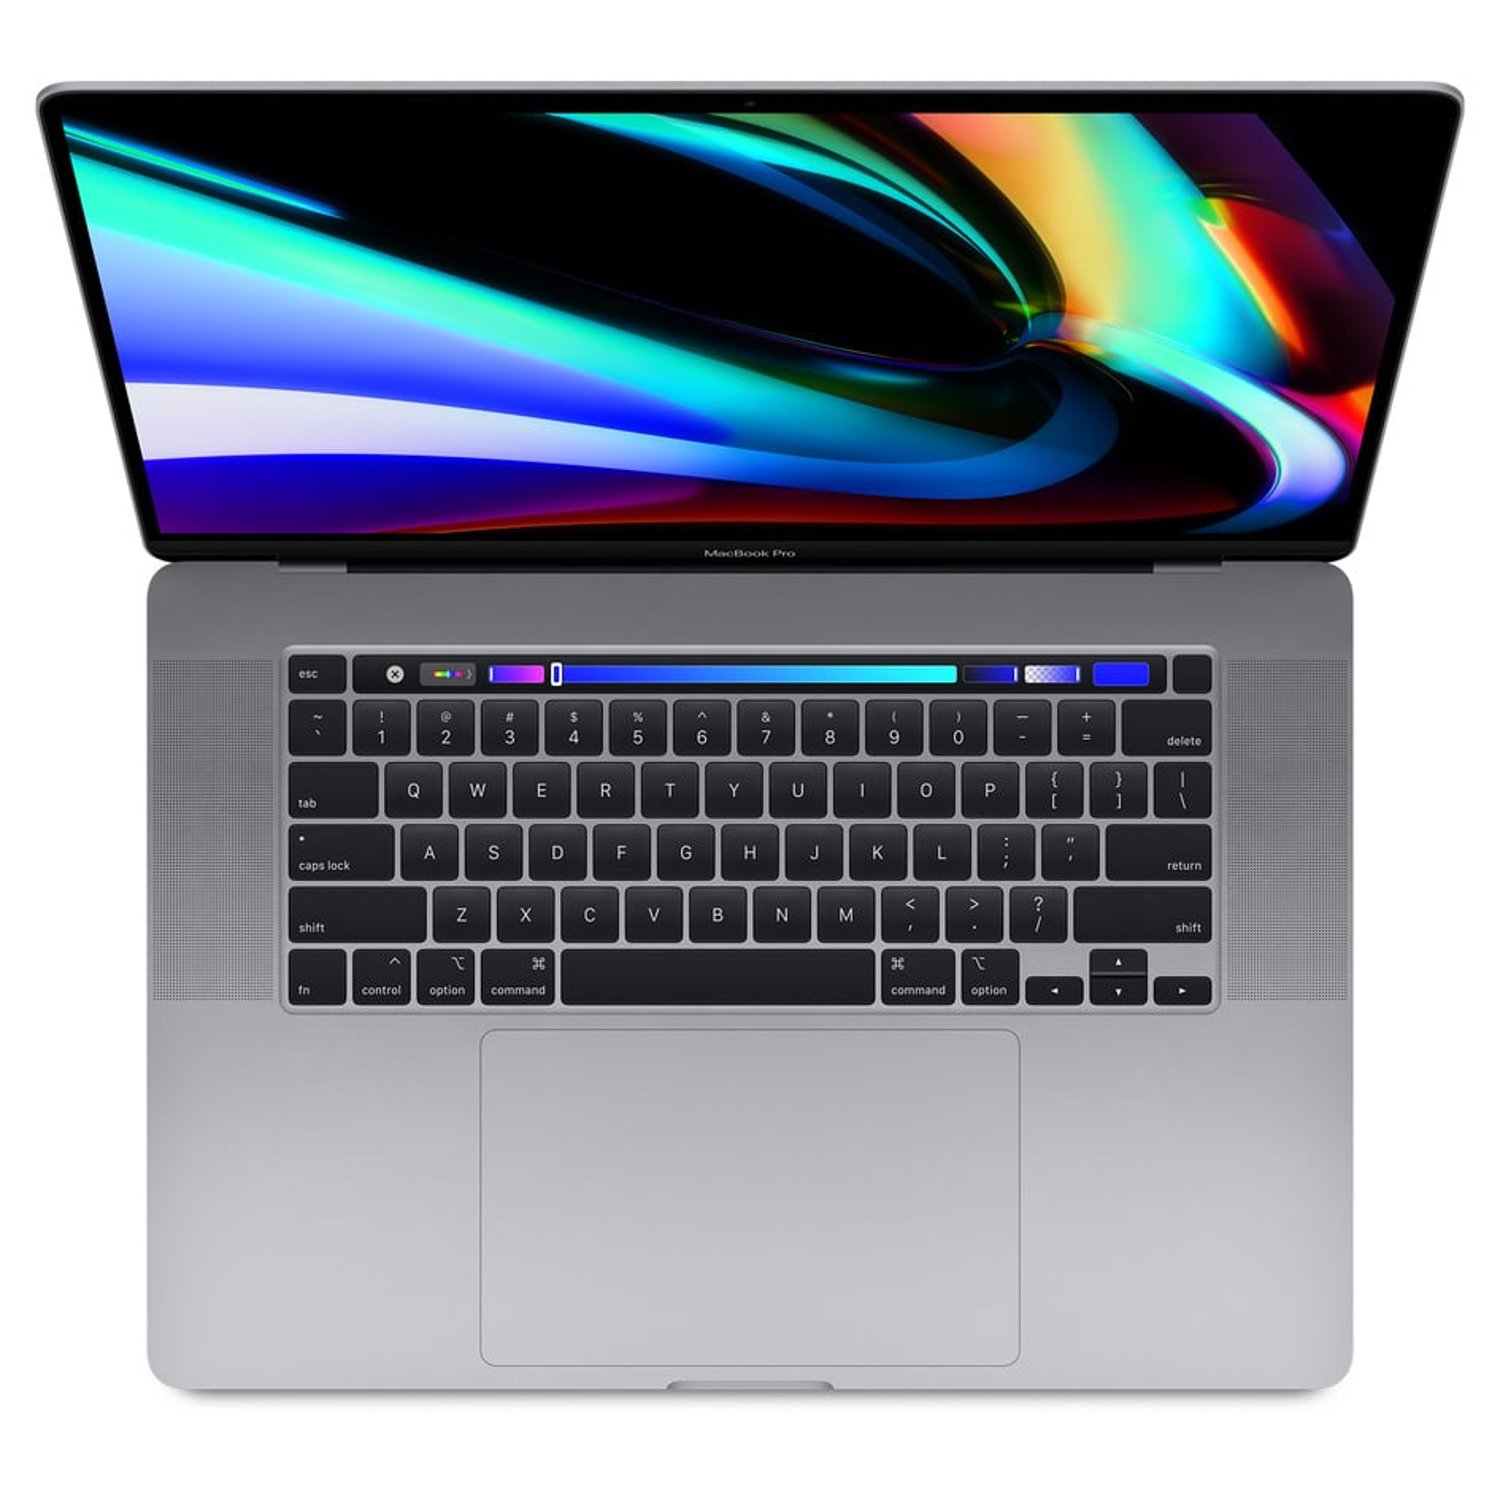 Apple MacBook Pro A1990 (2018) Core i7 2.3GHz | 16GB RAM | 256GB SSD | 15 inch Retina Touch Bar | Gray